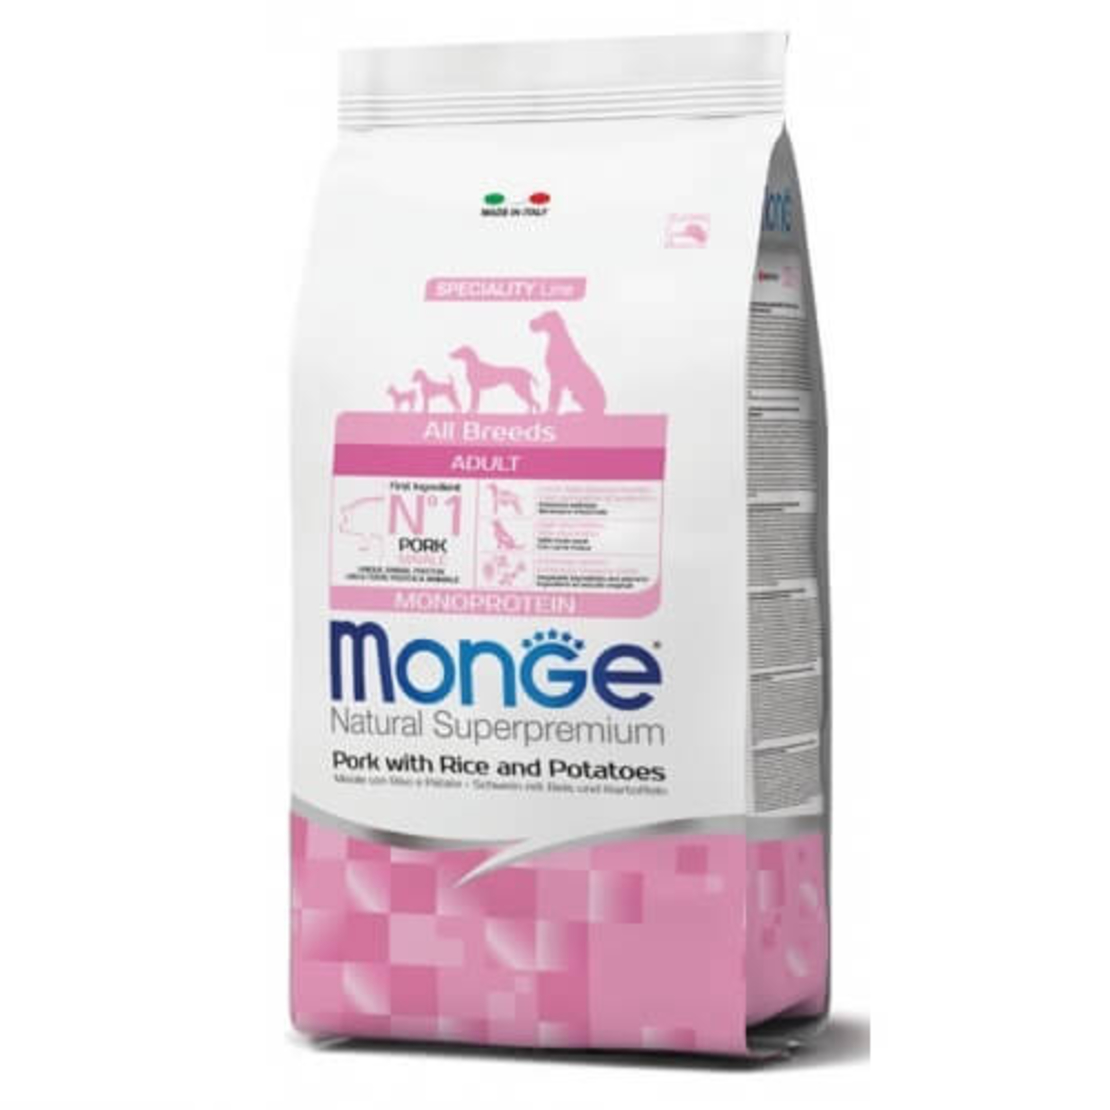 MONGE MONOPROTEIN מונג' מונופרוטאין לכלב בוגר על בסיס חזיר אורז ותפוחי אדמה 2.5 ק